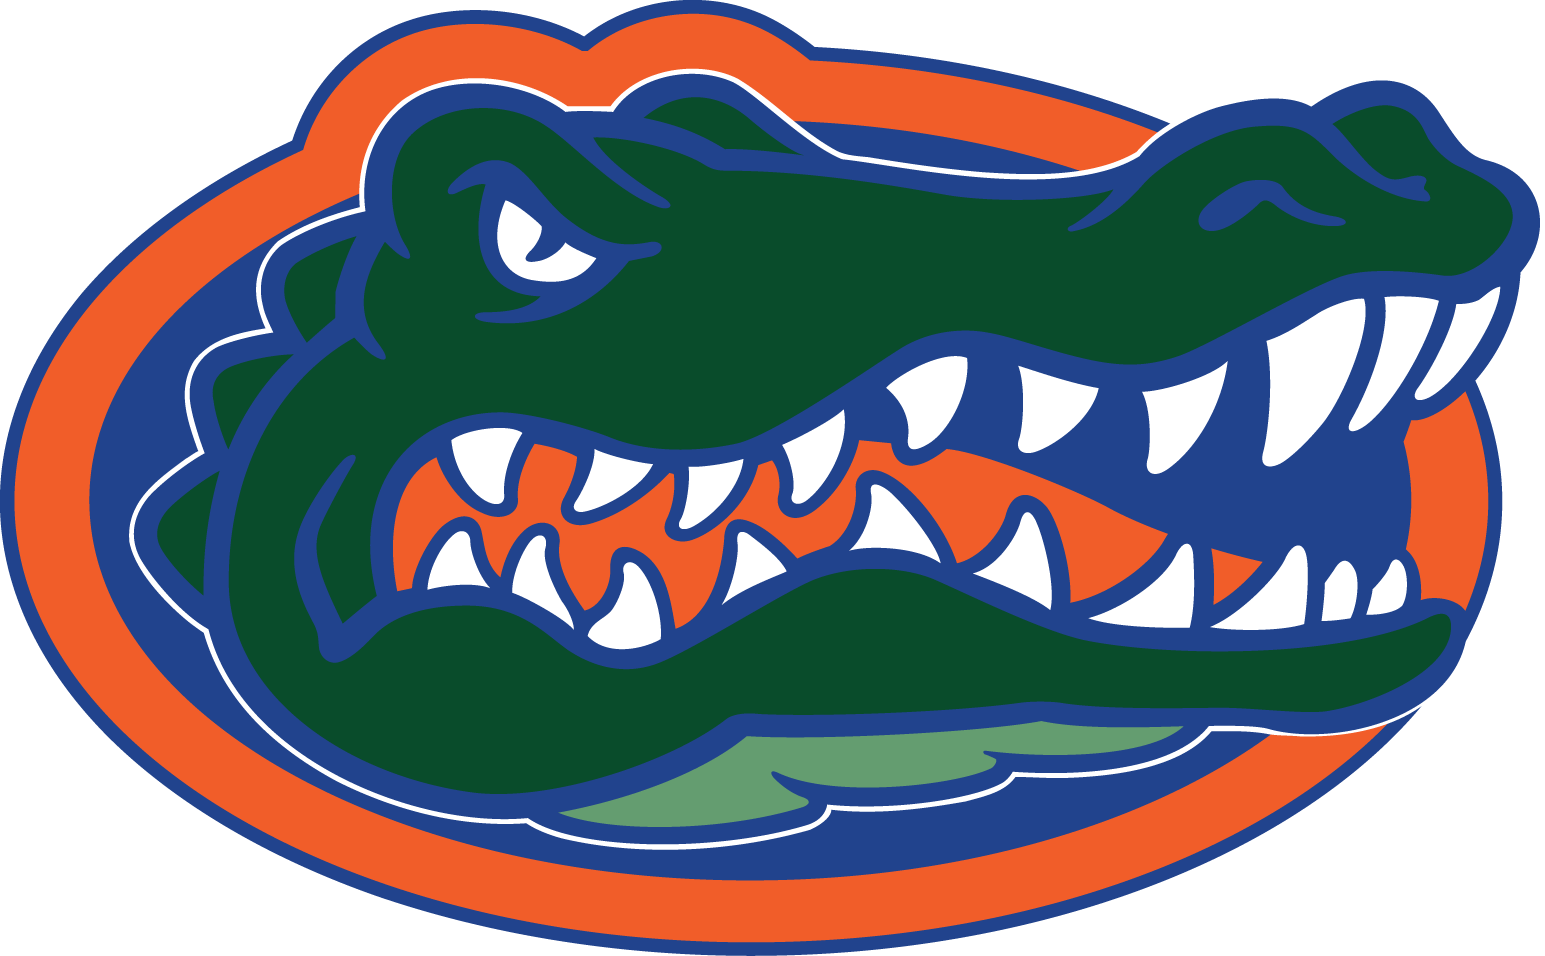 University of Florida Logo - University of Florida. Fox Sports University